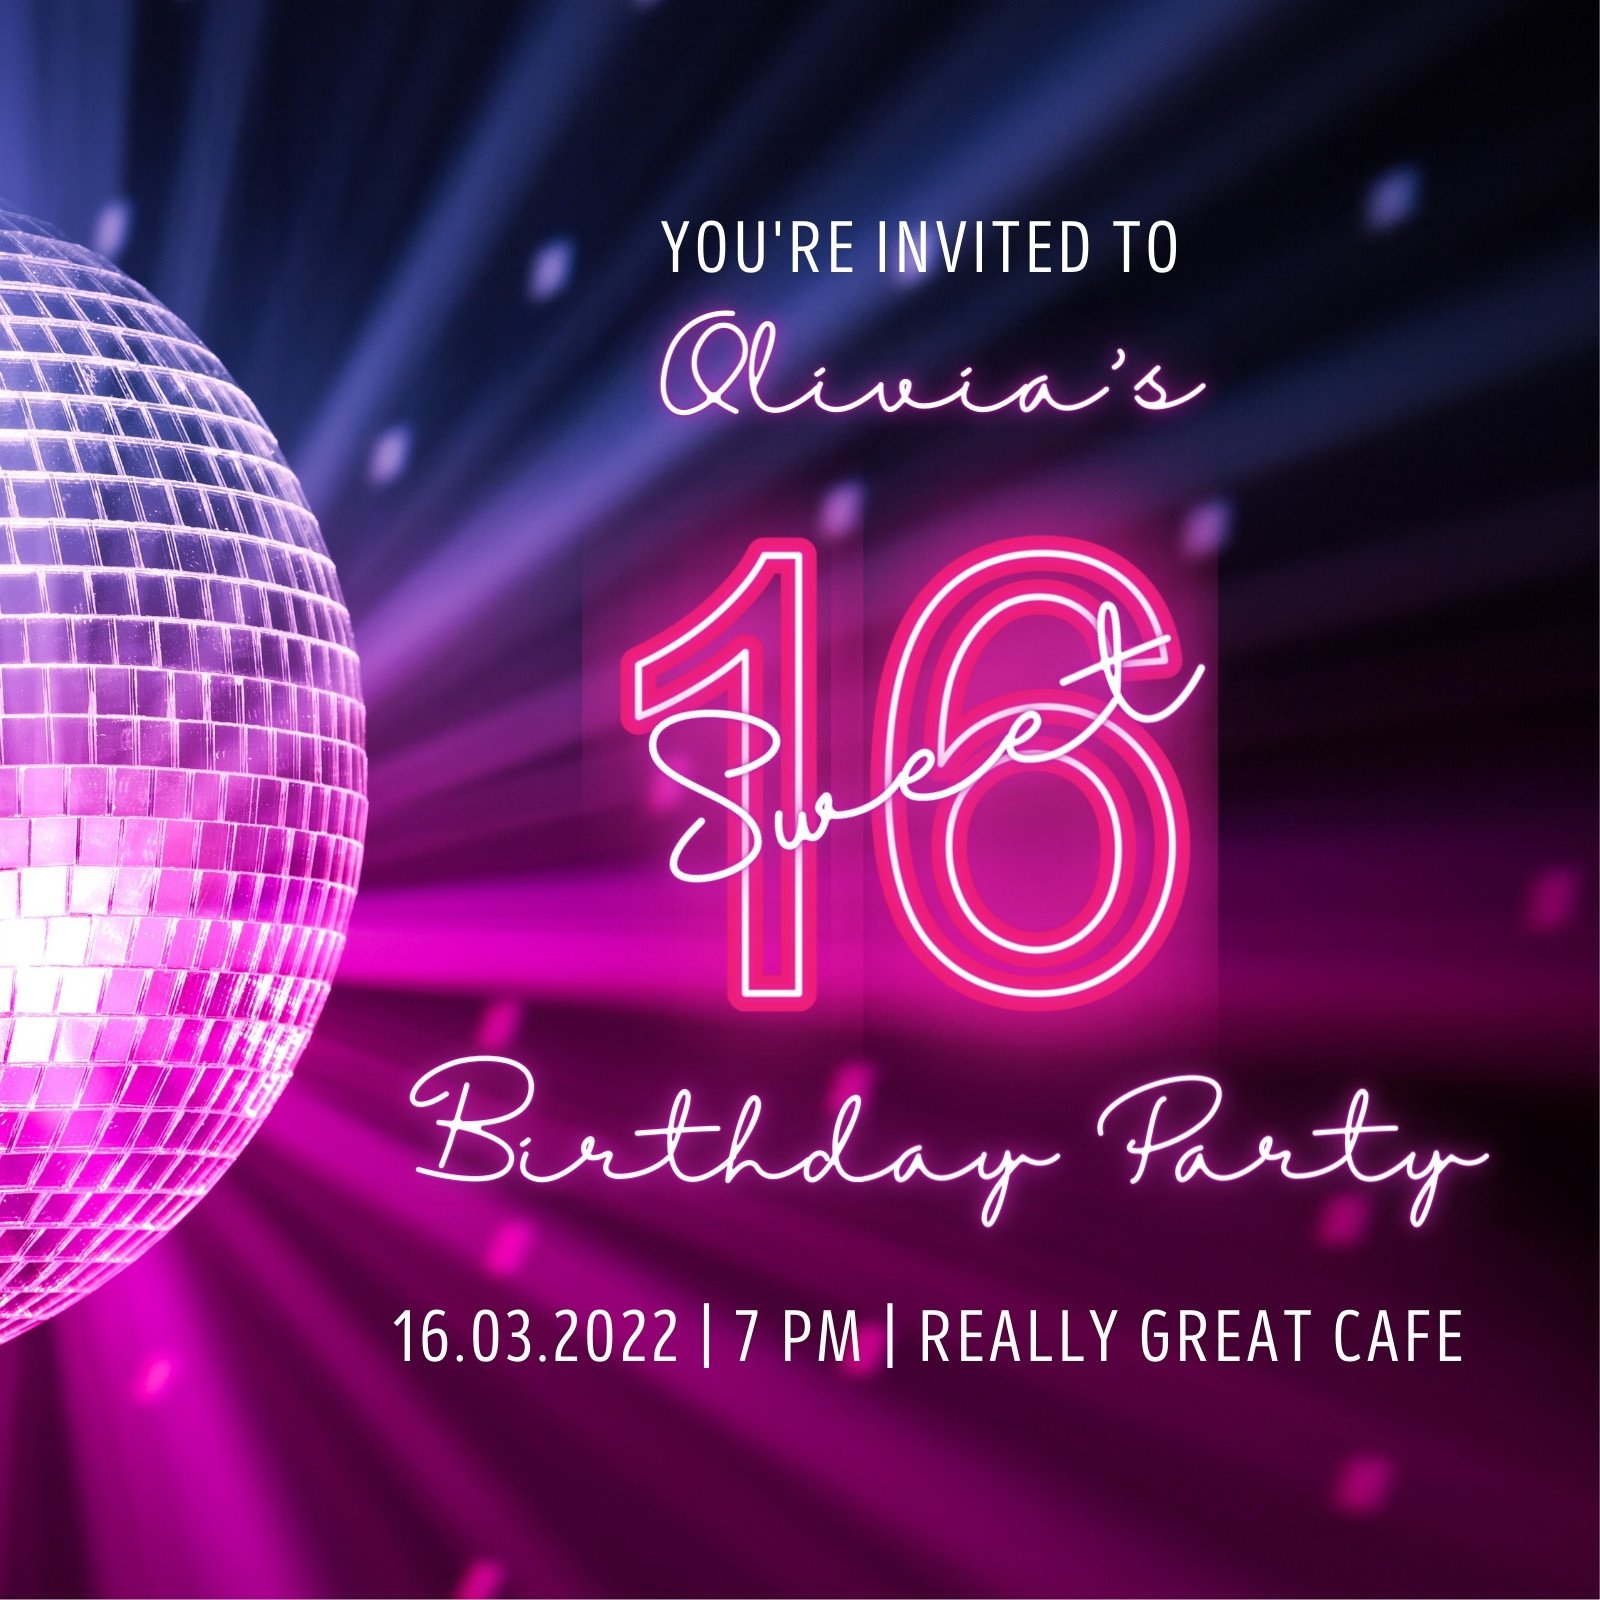 https://marketplace.canva.com/EAE1zIII60Q/1/0/1600w/canva-photocentric-disco-ball-sweet-sixteen-birthday-party-invitation-Ak8pZIrs_Pc.jpg